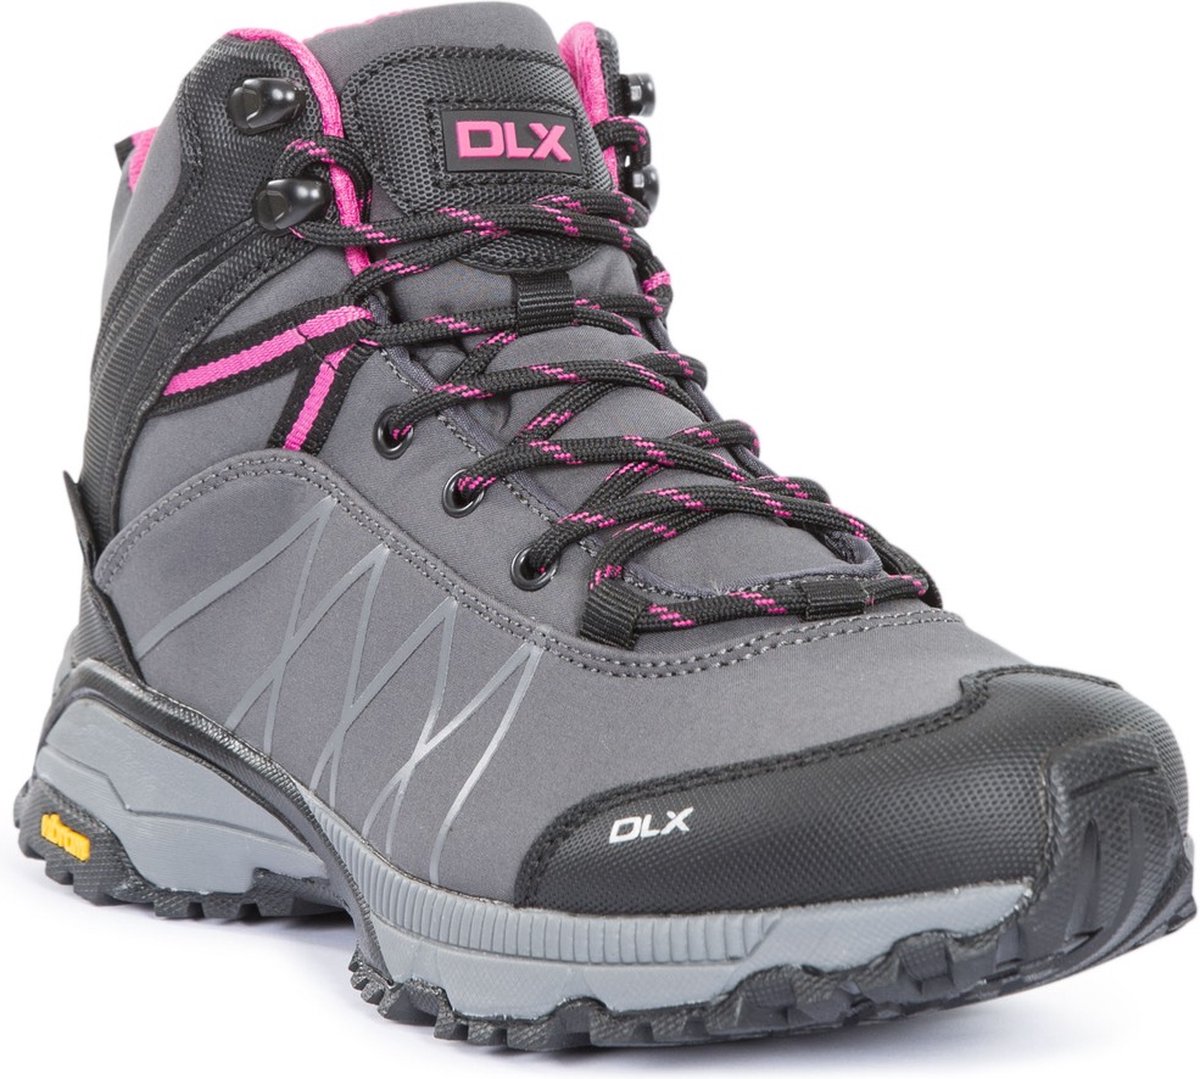 DLX Damen Wanderschuhe Arlington Ii - Female Dlx Hiking Boot Charcoal-40